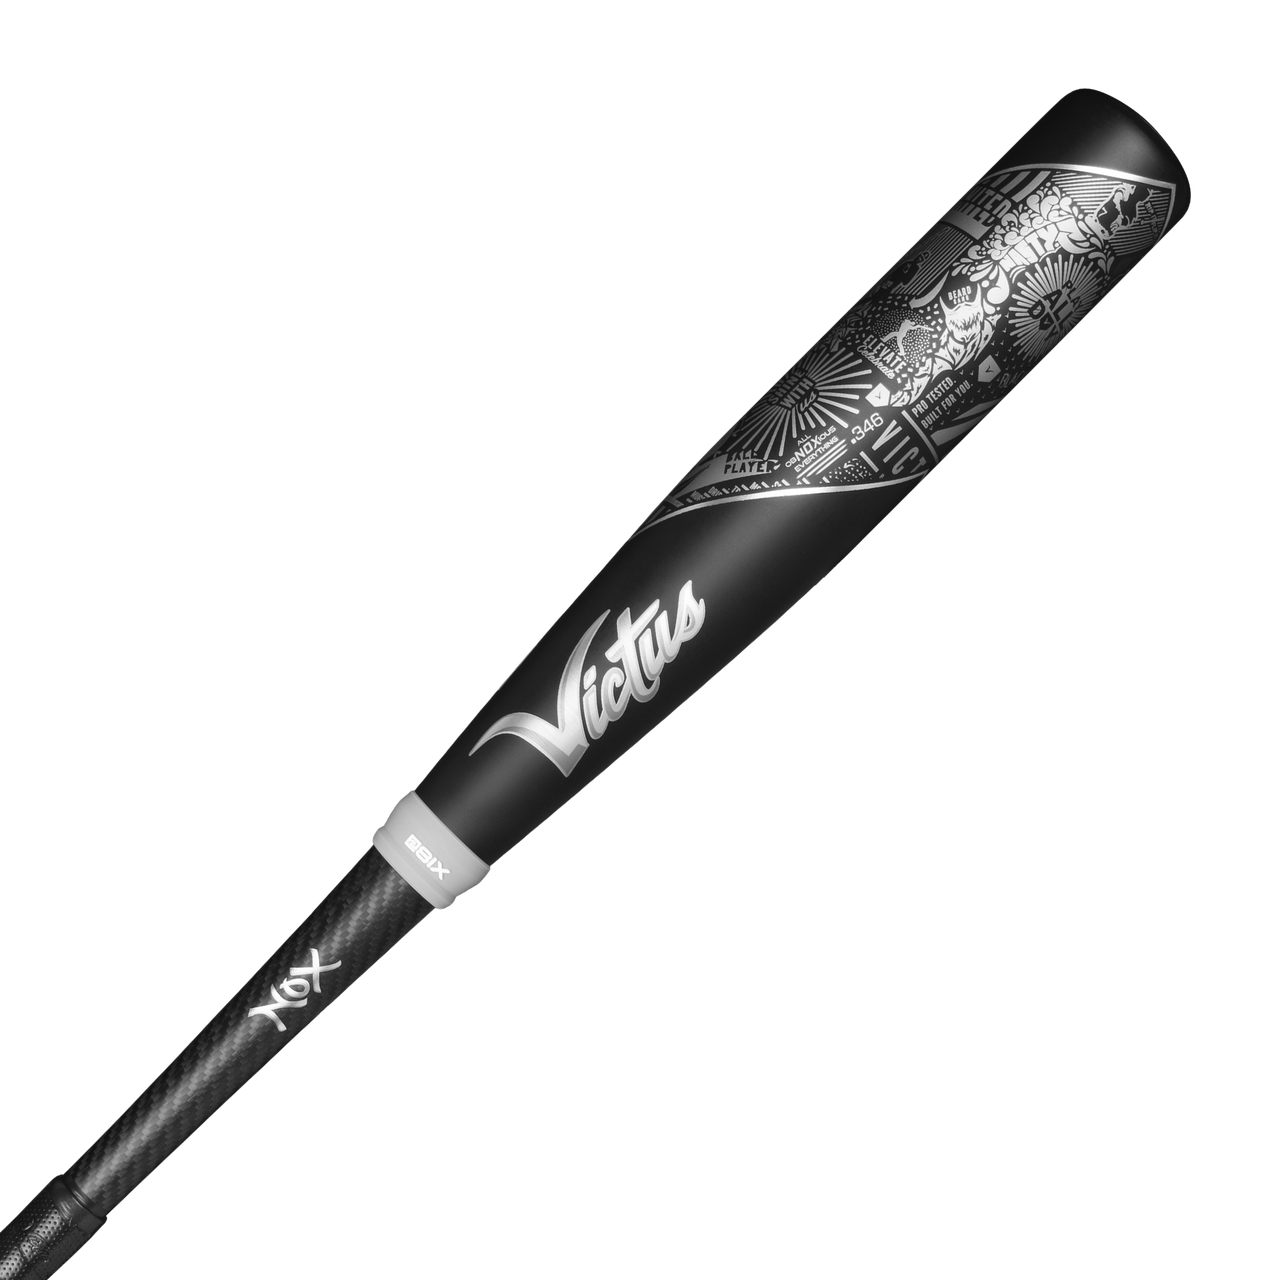 victus-nox-2-bbcor-baseball-bat-33-inch-30-oz VCBN2-3330   The NOX 2 BBCOR bat is a two-piece hybrid design that